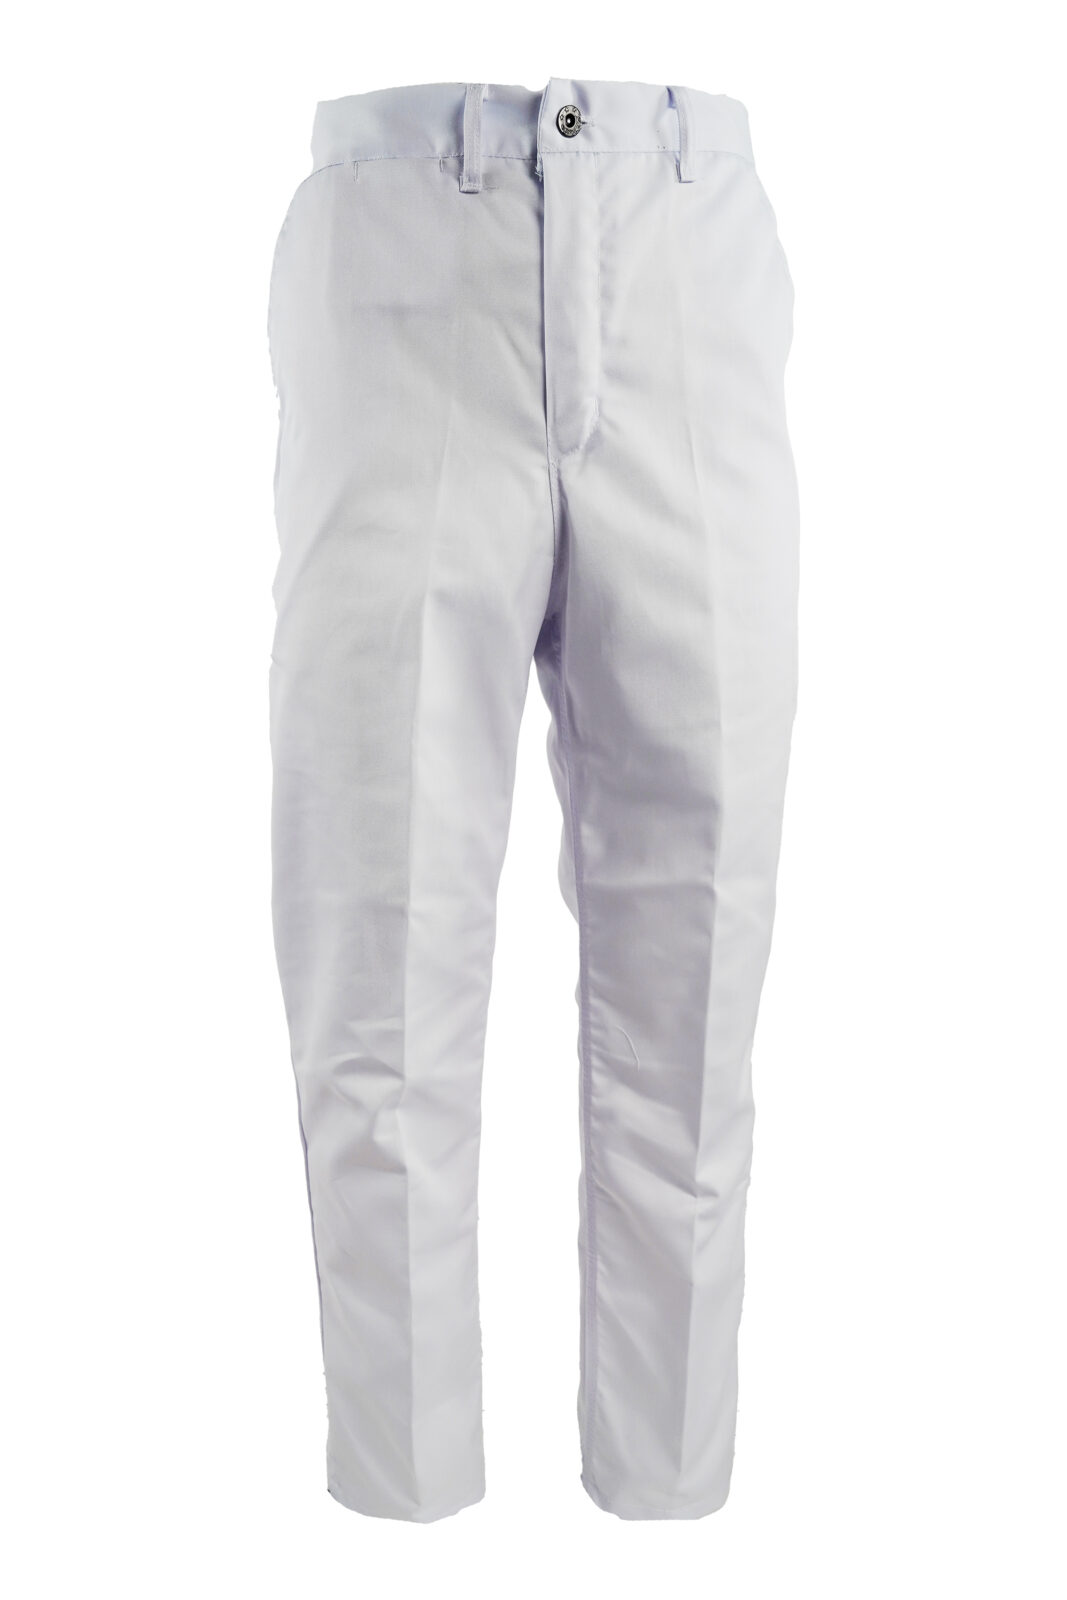 Titan Workwear White Conti Trouser - Santon Workwear